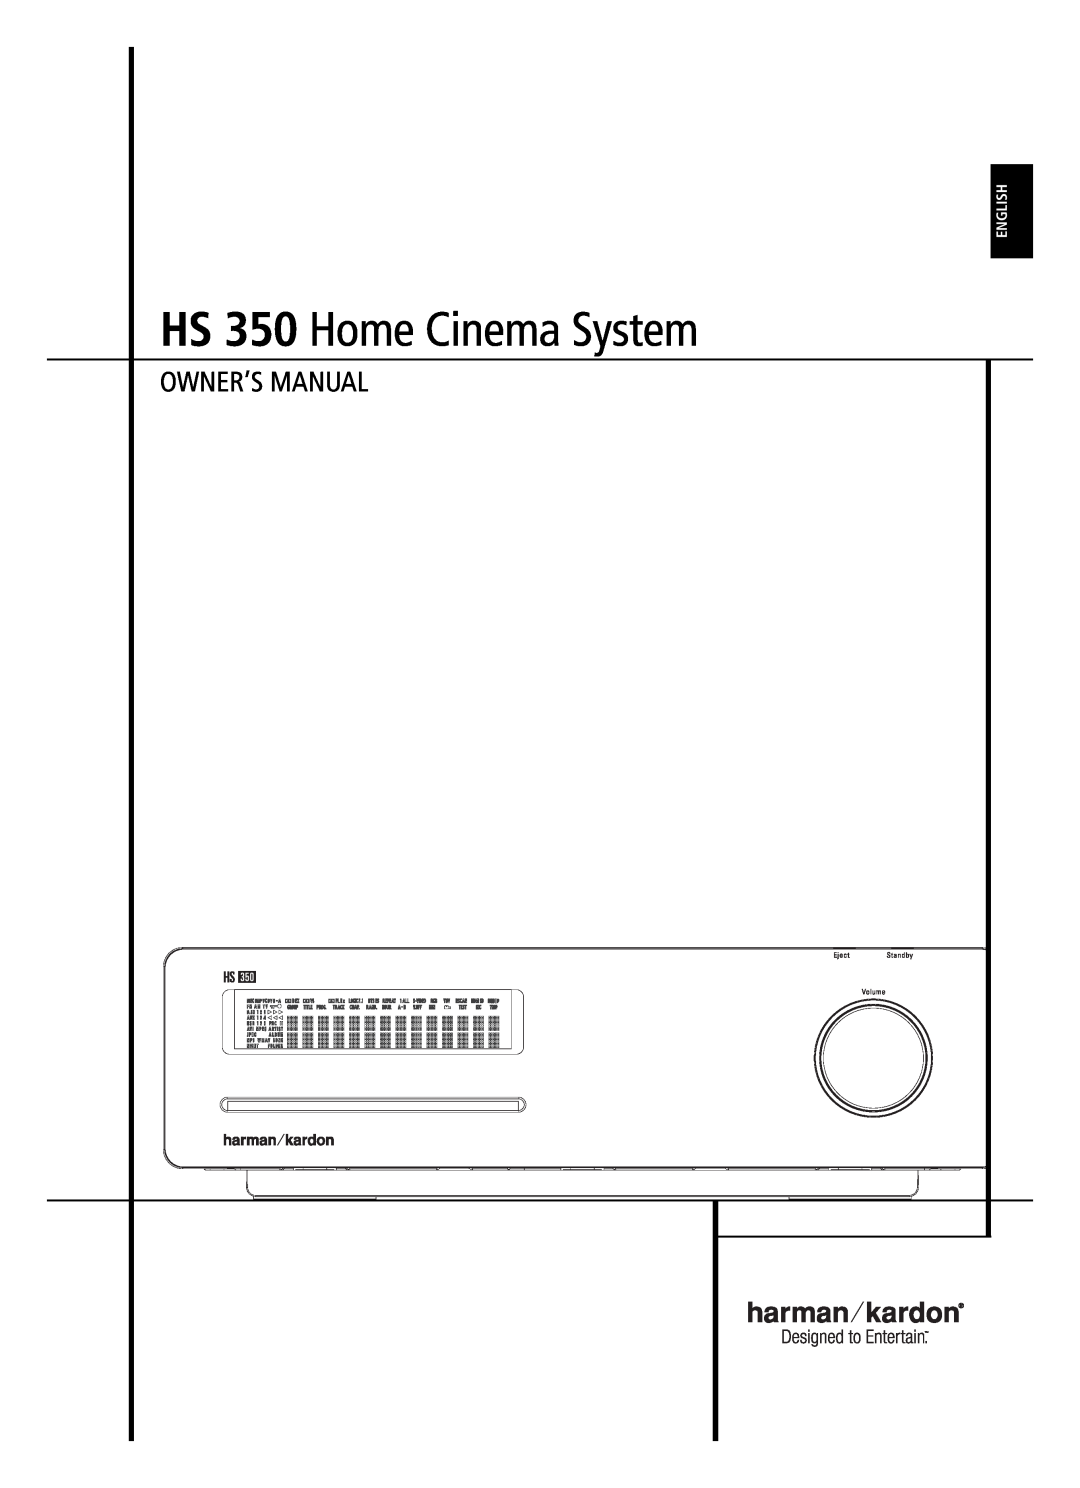 Harman-Kardon owner manual HS 350 Home Cinema System, Owner’S Manual, English 